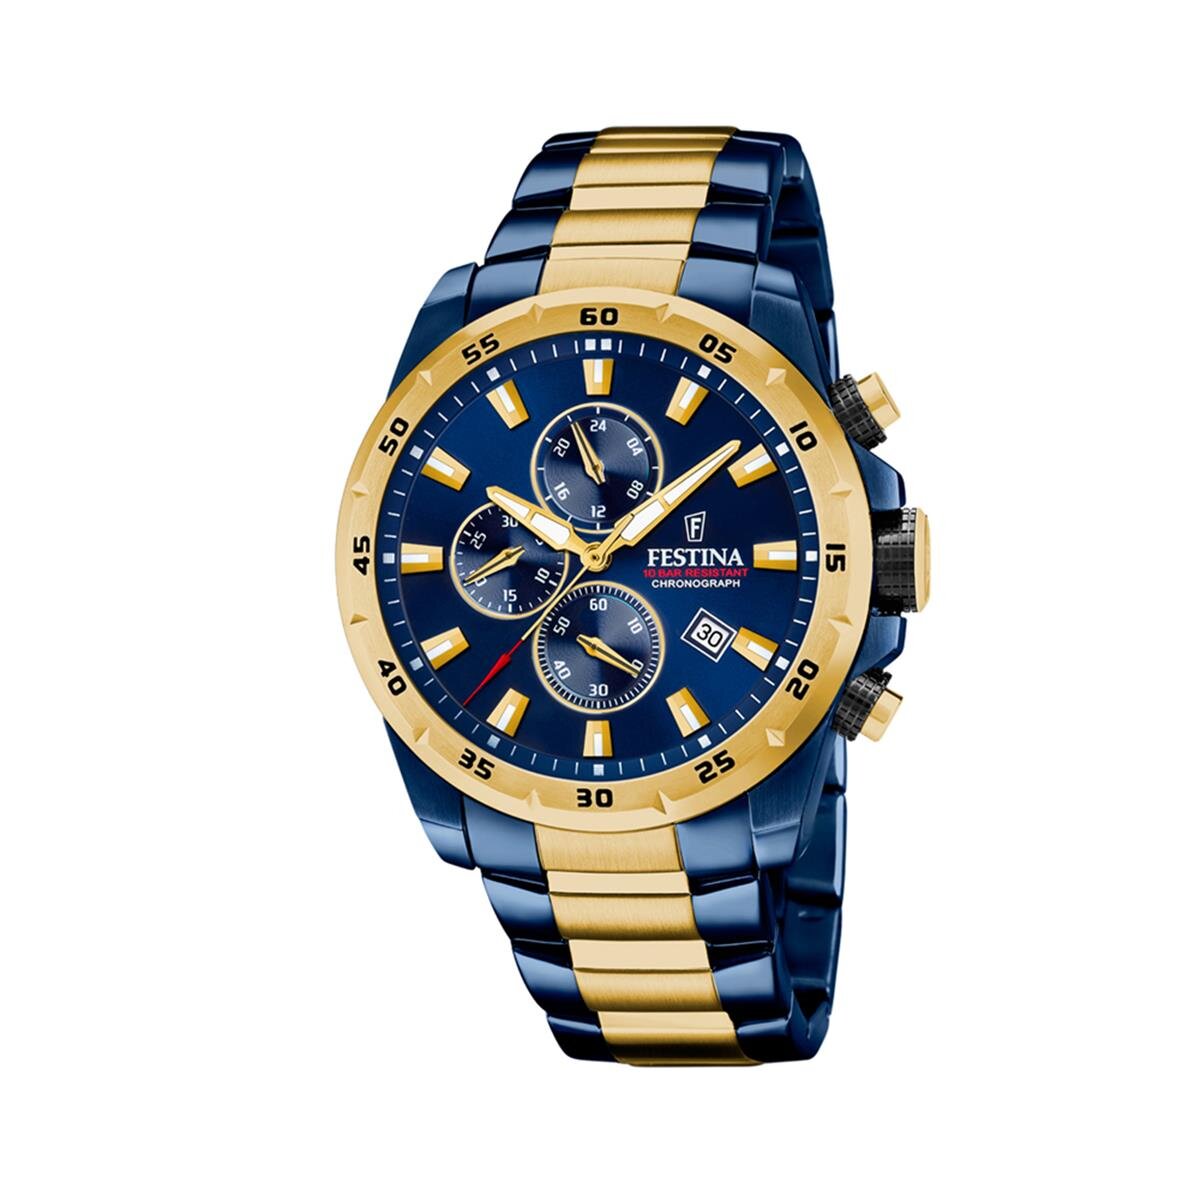 Festina Herren Uhr F20564/1 Chronograph Edelstahl gold, blau plattiert